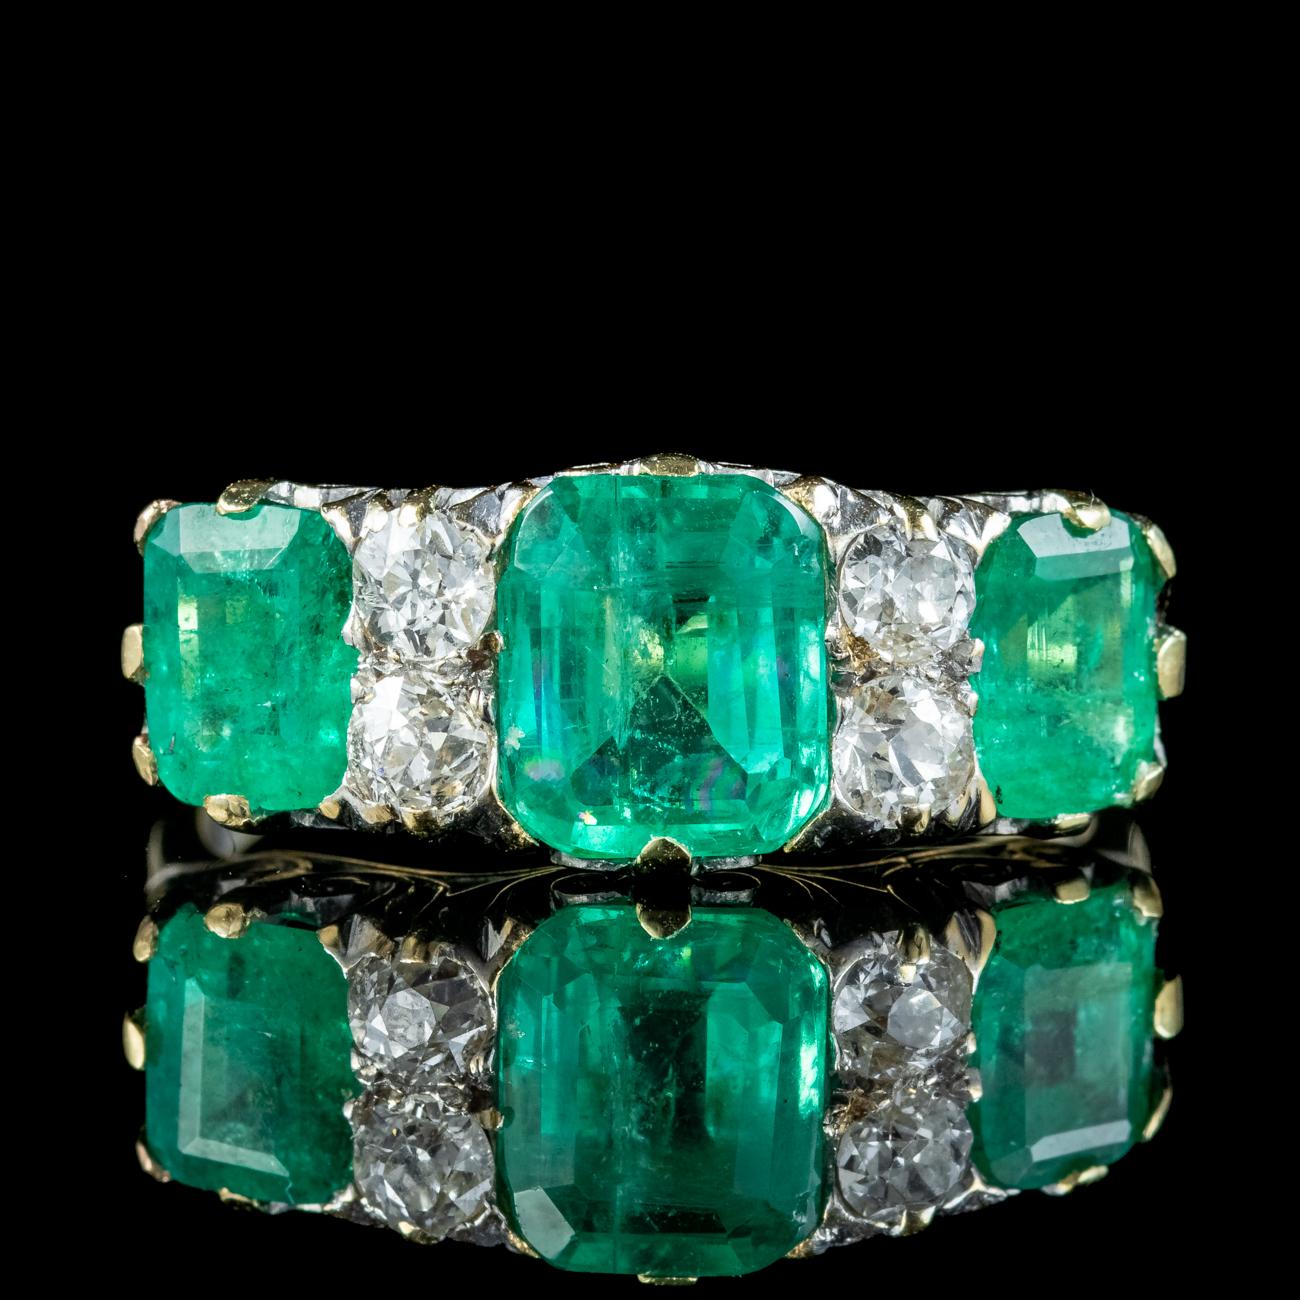 Antiker viktorianischer Smaragd-Diamant-Ring mit 3,07 Karat Smaragd, datiert 1900, zertifiziert (Viktorianisch) im Angebot